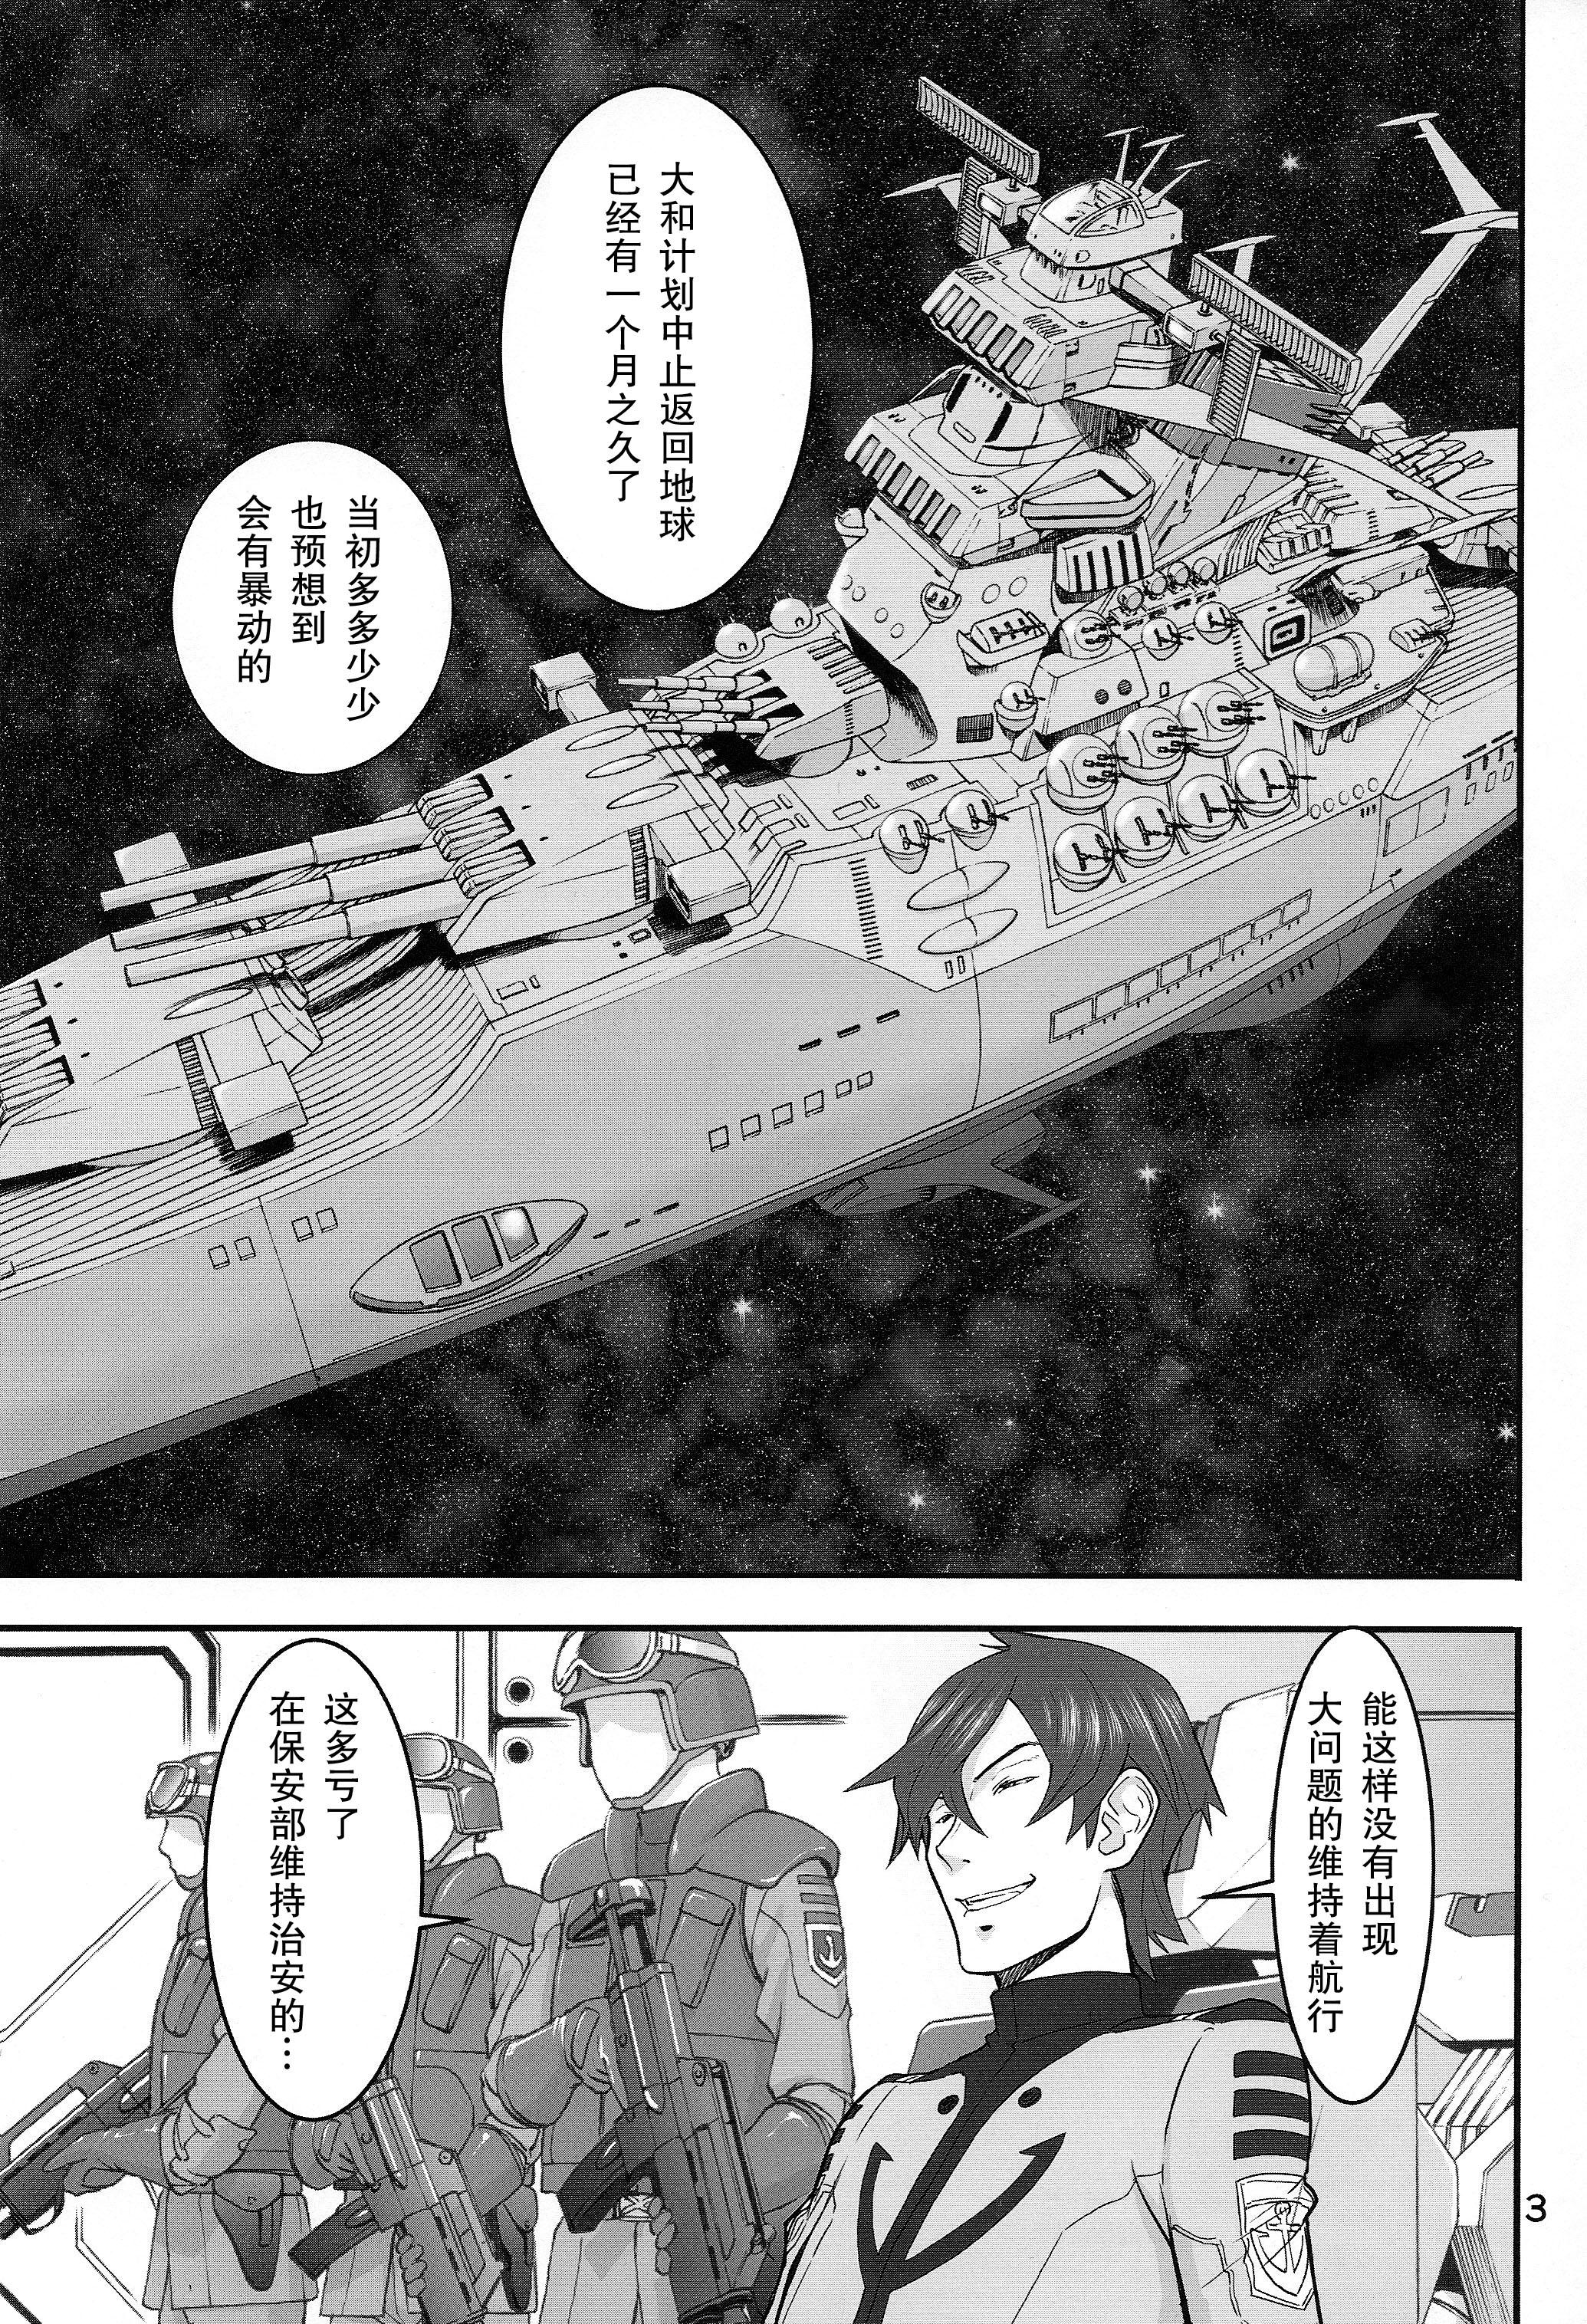 Spy Camera Kan Kan Nisshi - Space battleship yamato Fat - Page 2